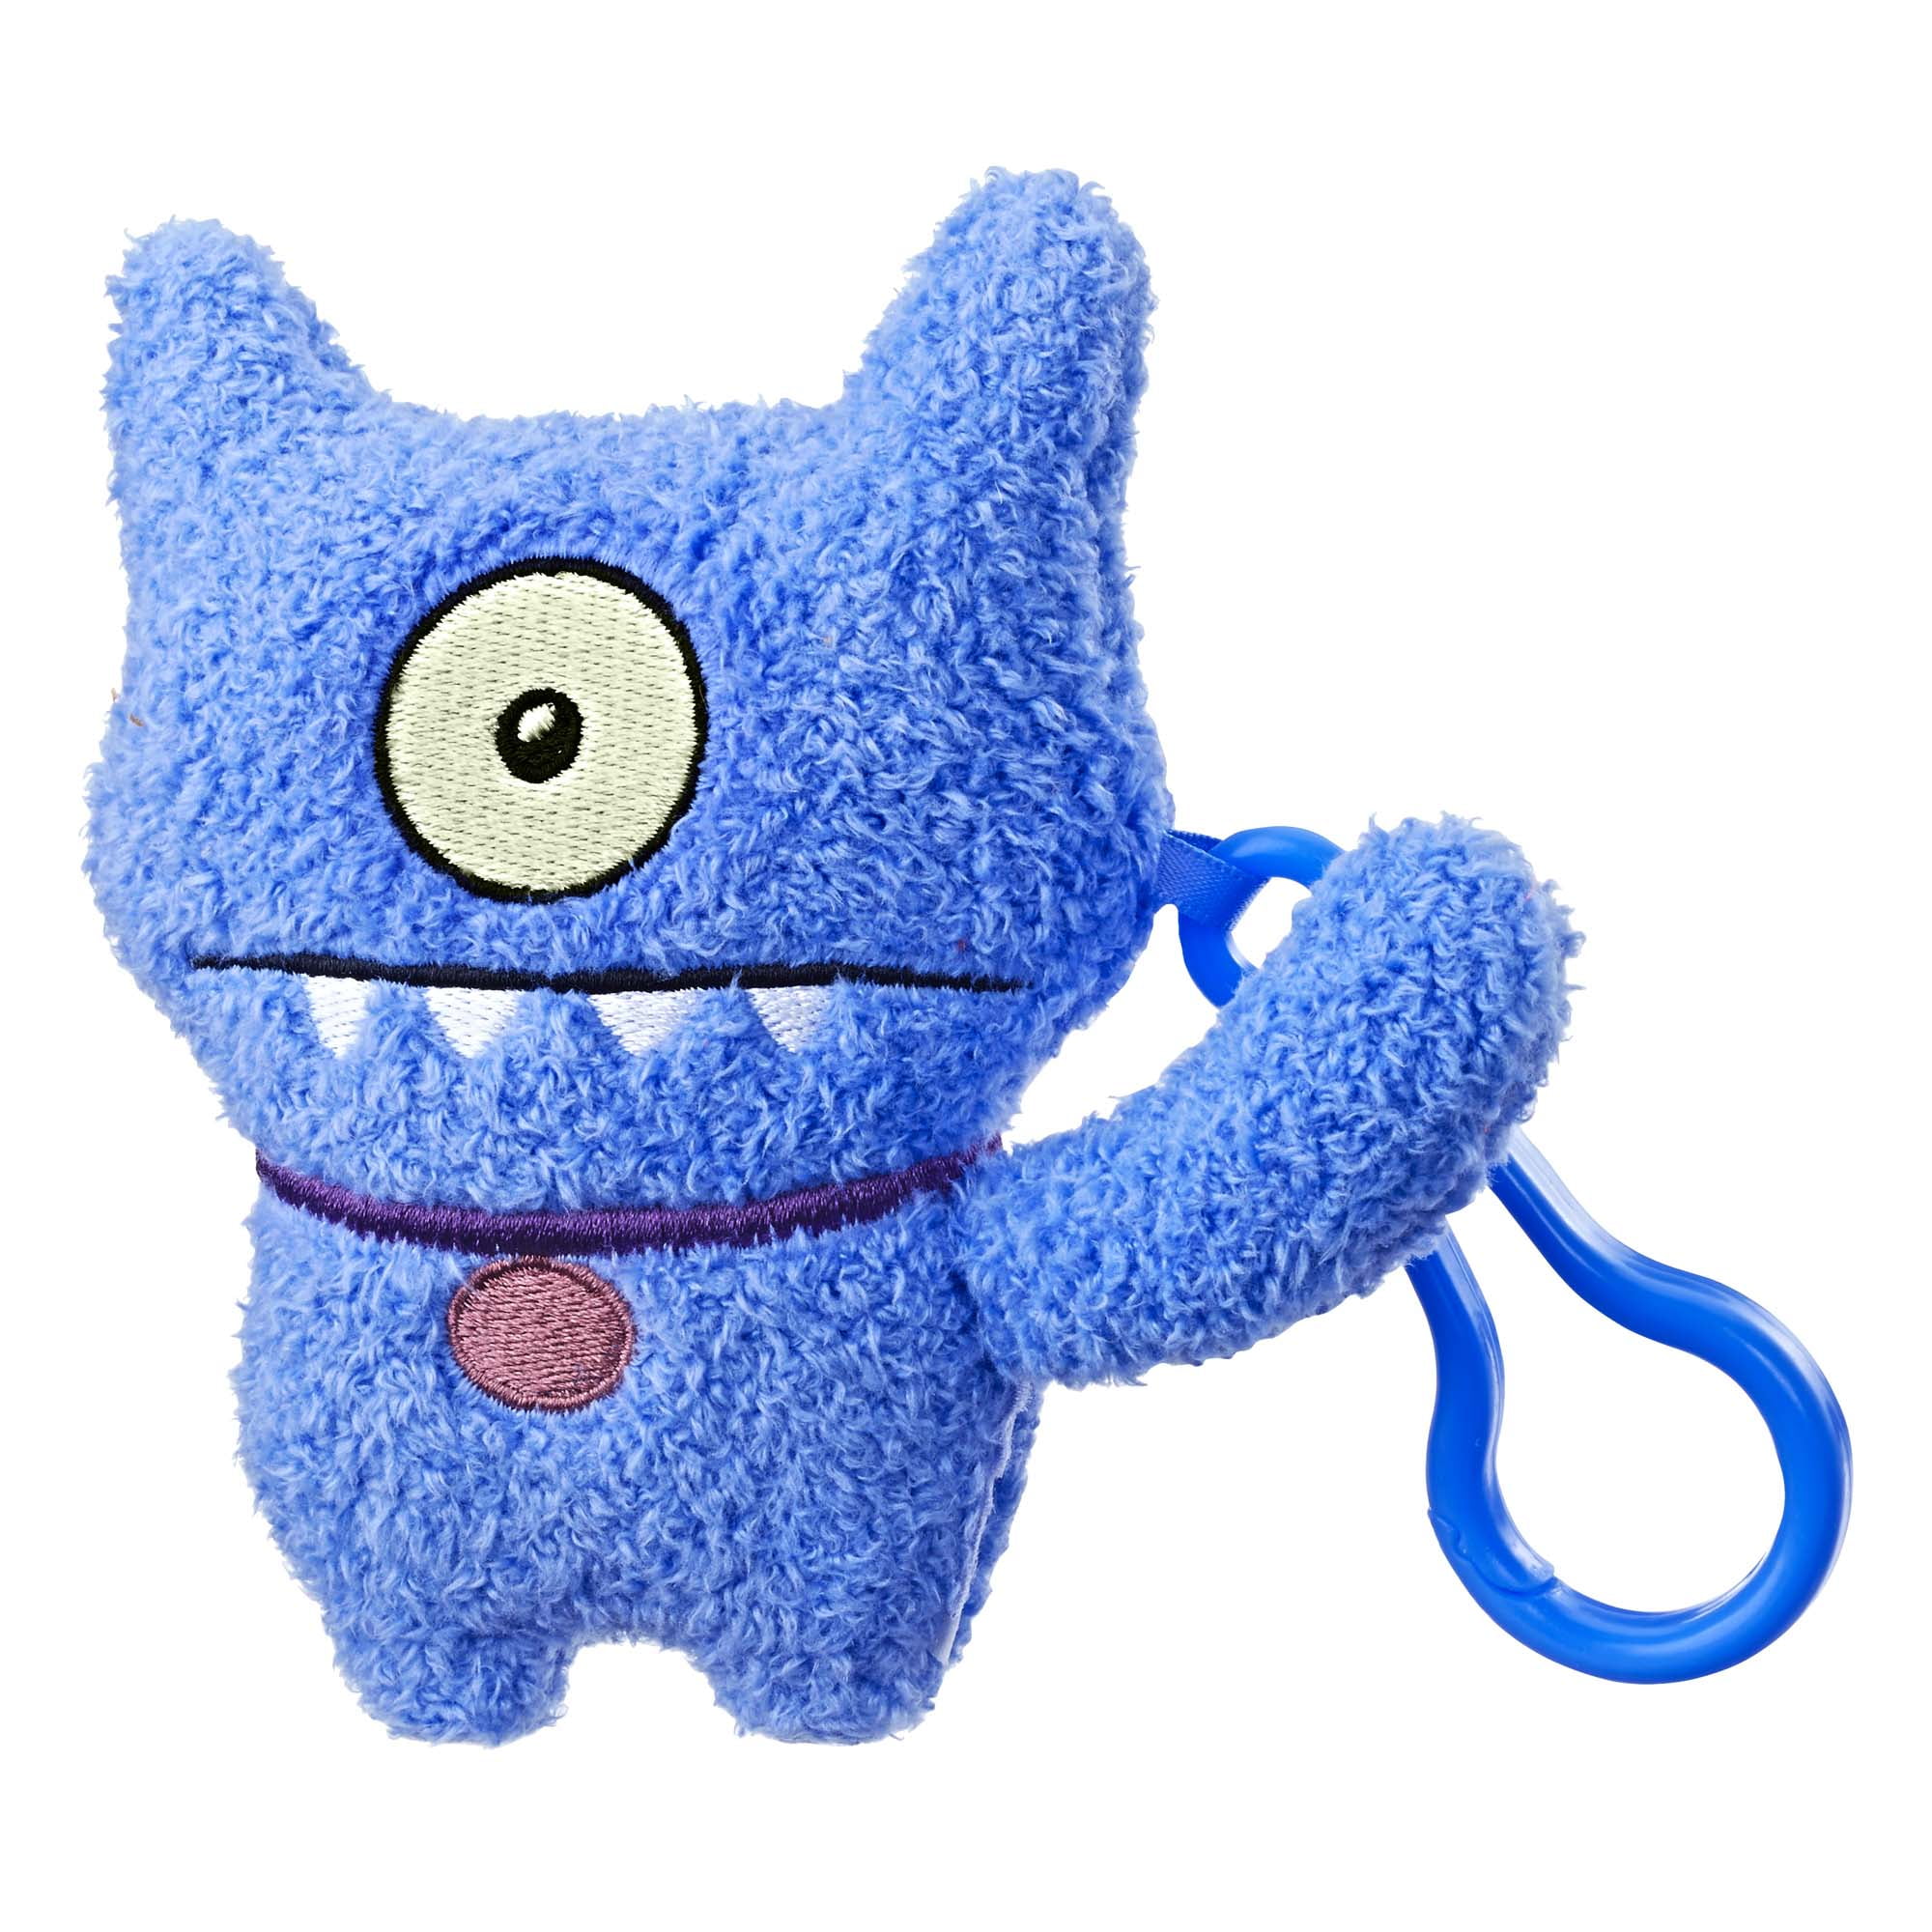 Uglydolls Ugly Dolls Artist Series 1 Mini 5" Stuffed Plush Toy Hasbro for sale online 